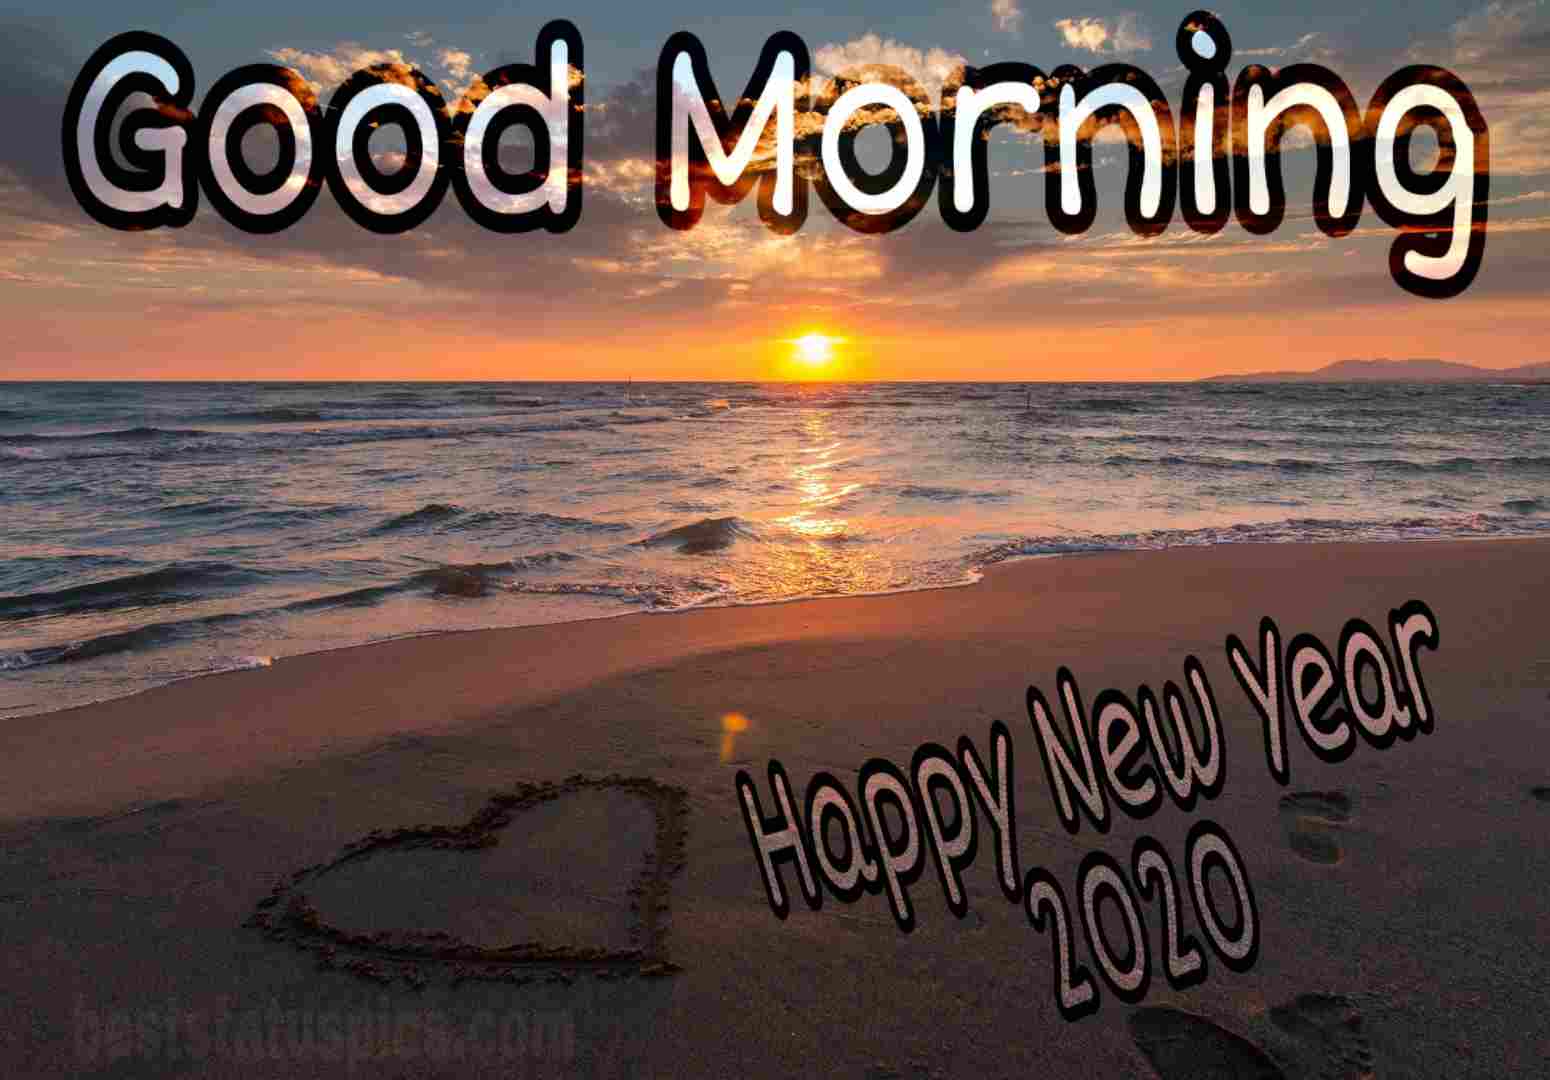 Good Morning Happy New Year 2020 Whatsapp Dp Status Images ...